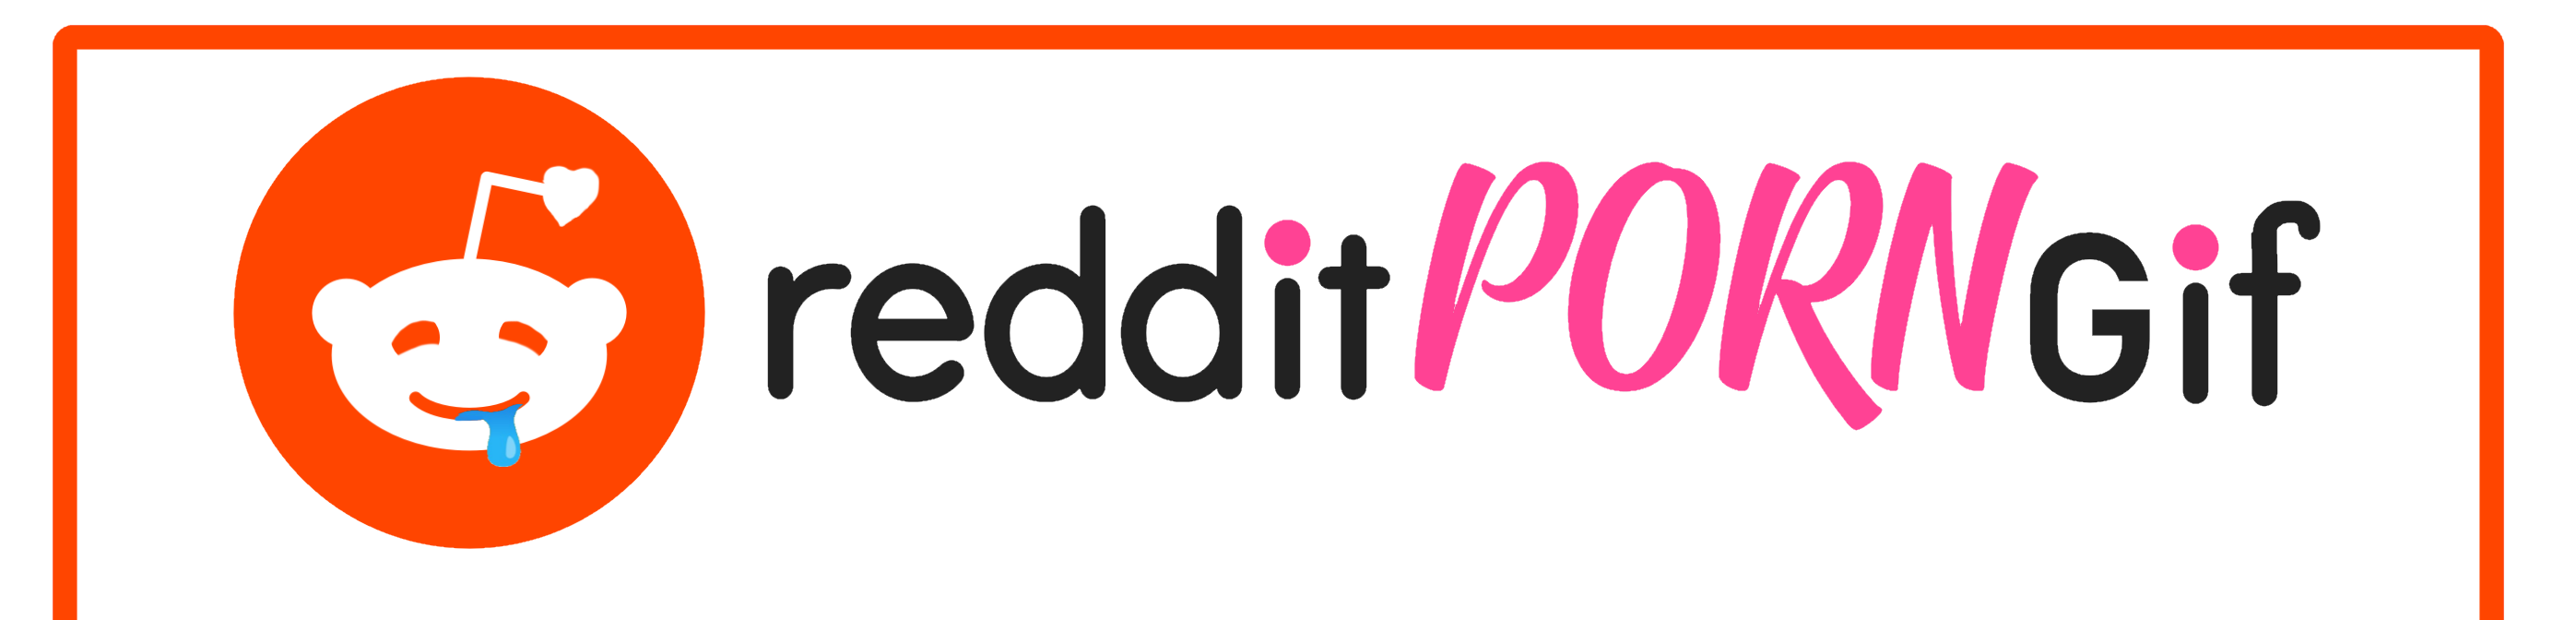 Home - Reddit Porn Gifs